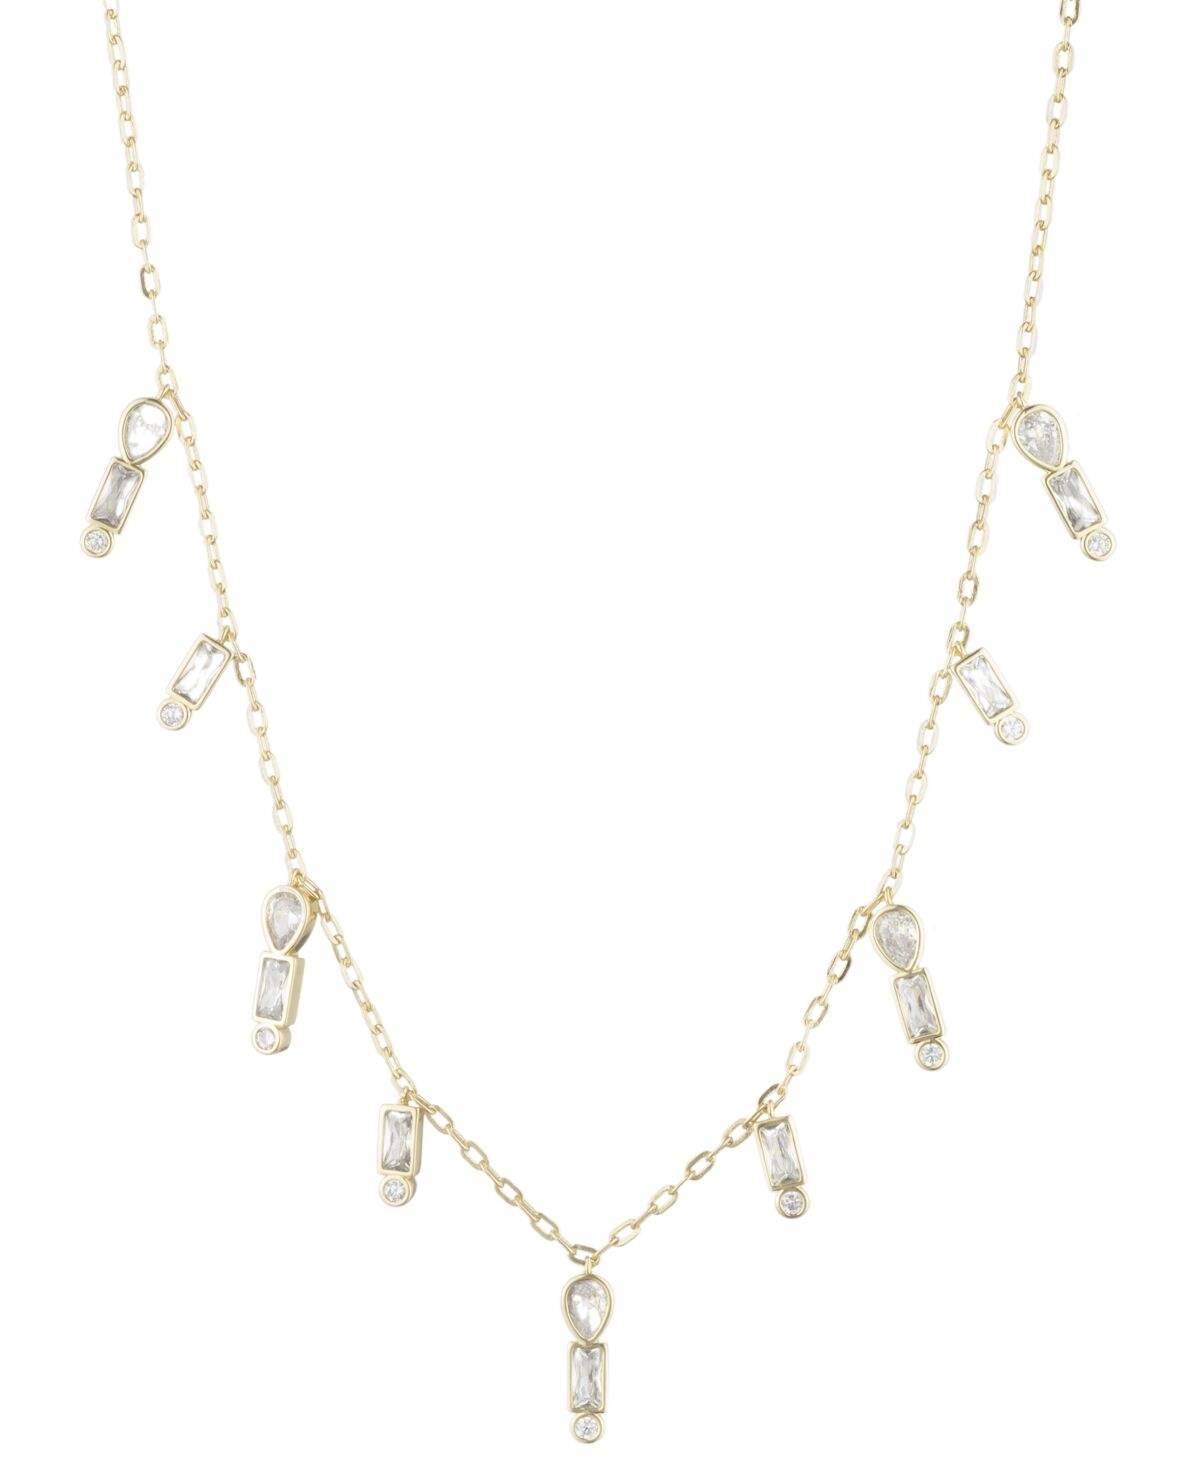 Bonheur Jewelry Jacqueline Multi Charm Necklace - Karat Gold Plated Brass